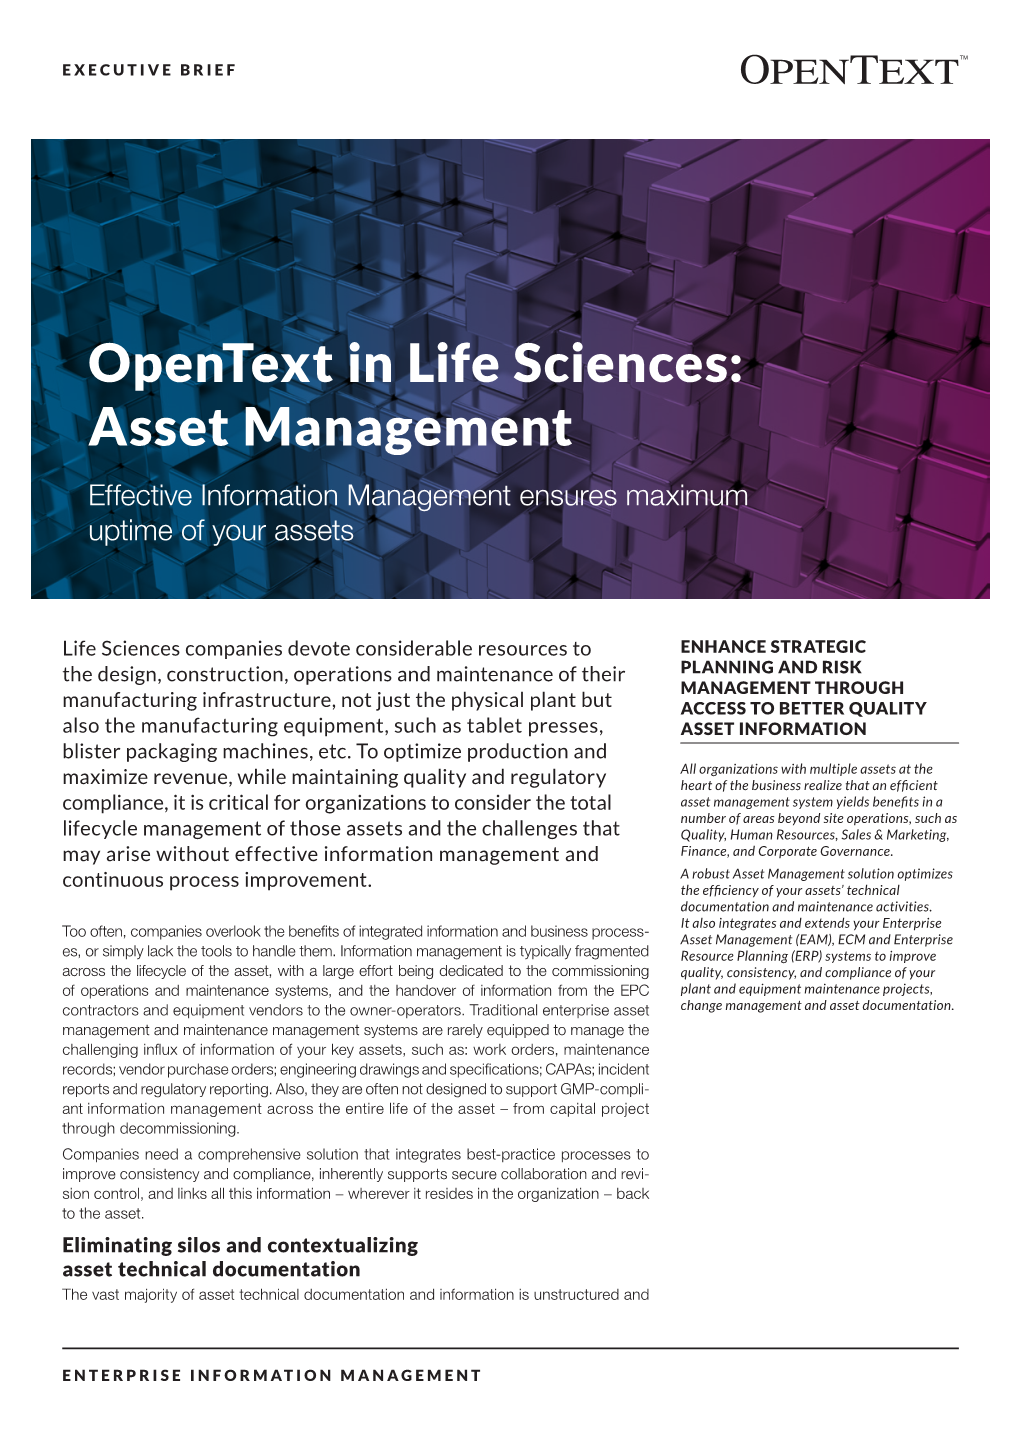 Opentext in Life Sciences: Asset Management Effective Information Management Ensures Maximum Uptime of Your Assets